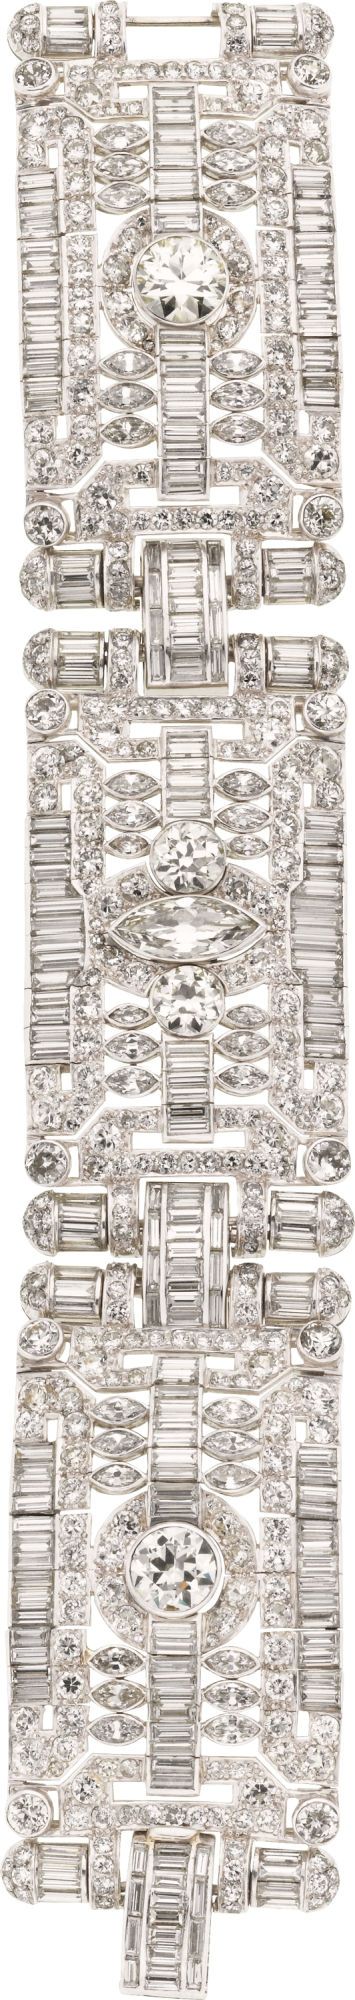 Luxury Estate Platinum Diamond Bracelet. |Classy & Elegant | @nyrockphotogir...